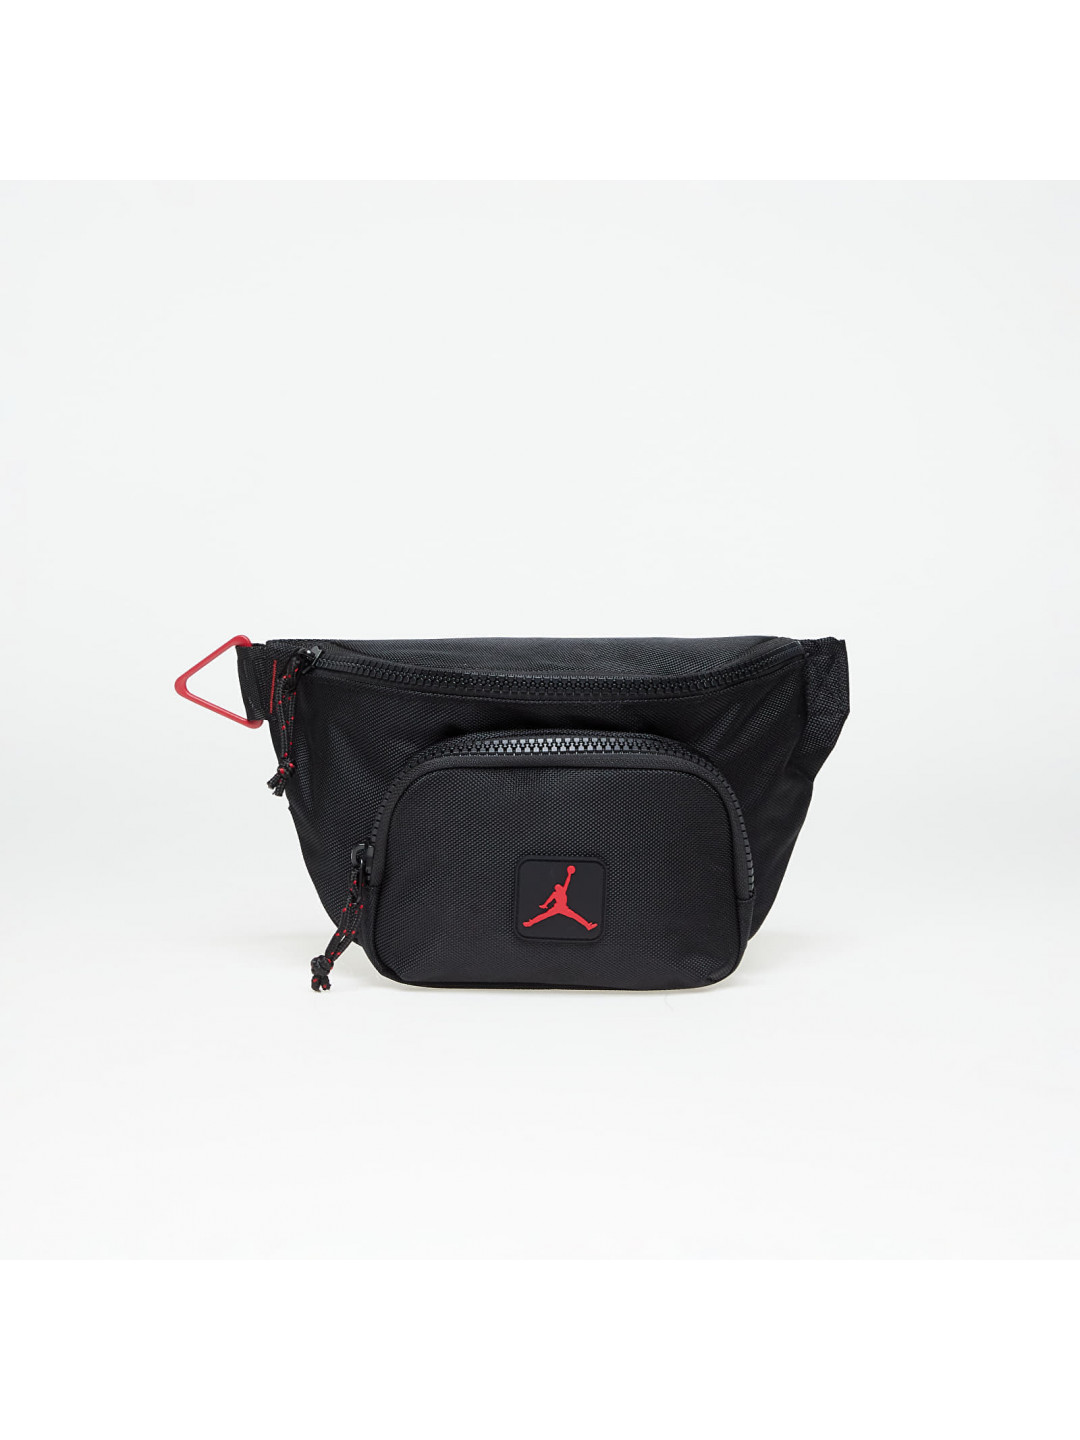 Jordan Rise Cross Body Bag Black